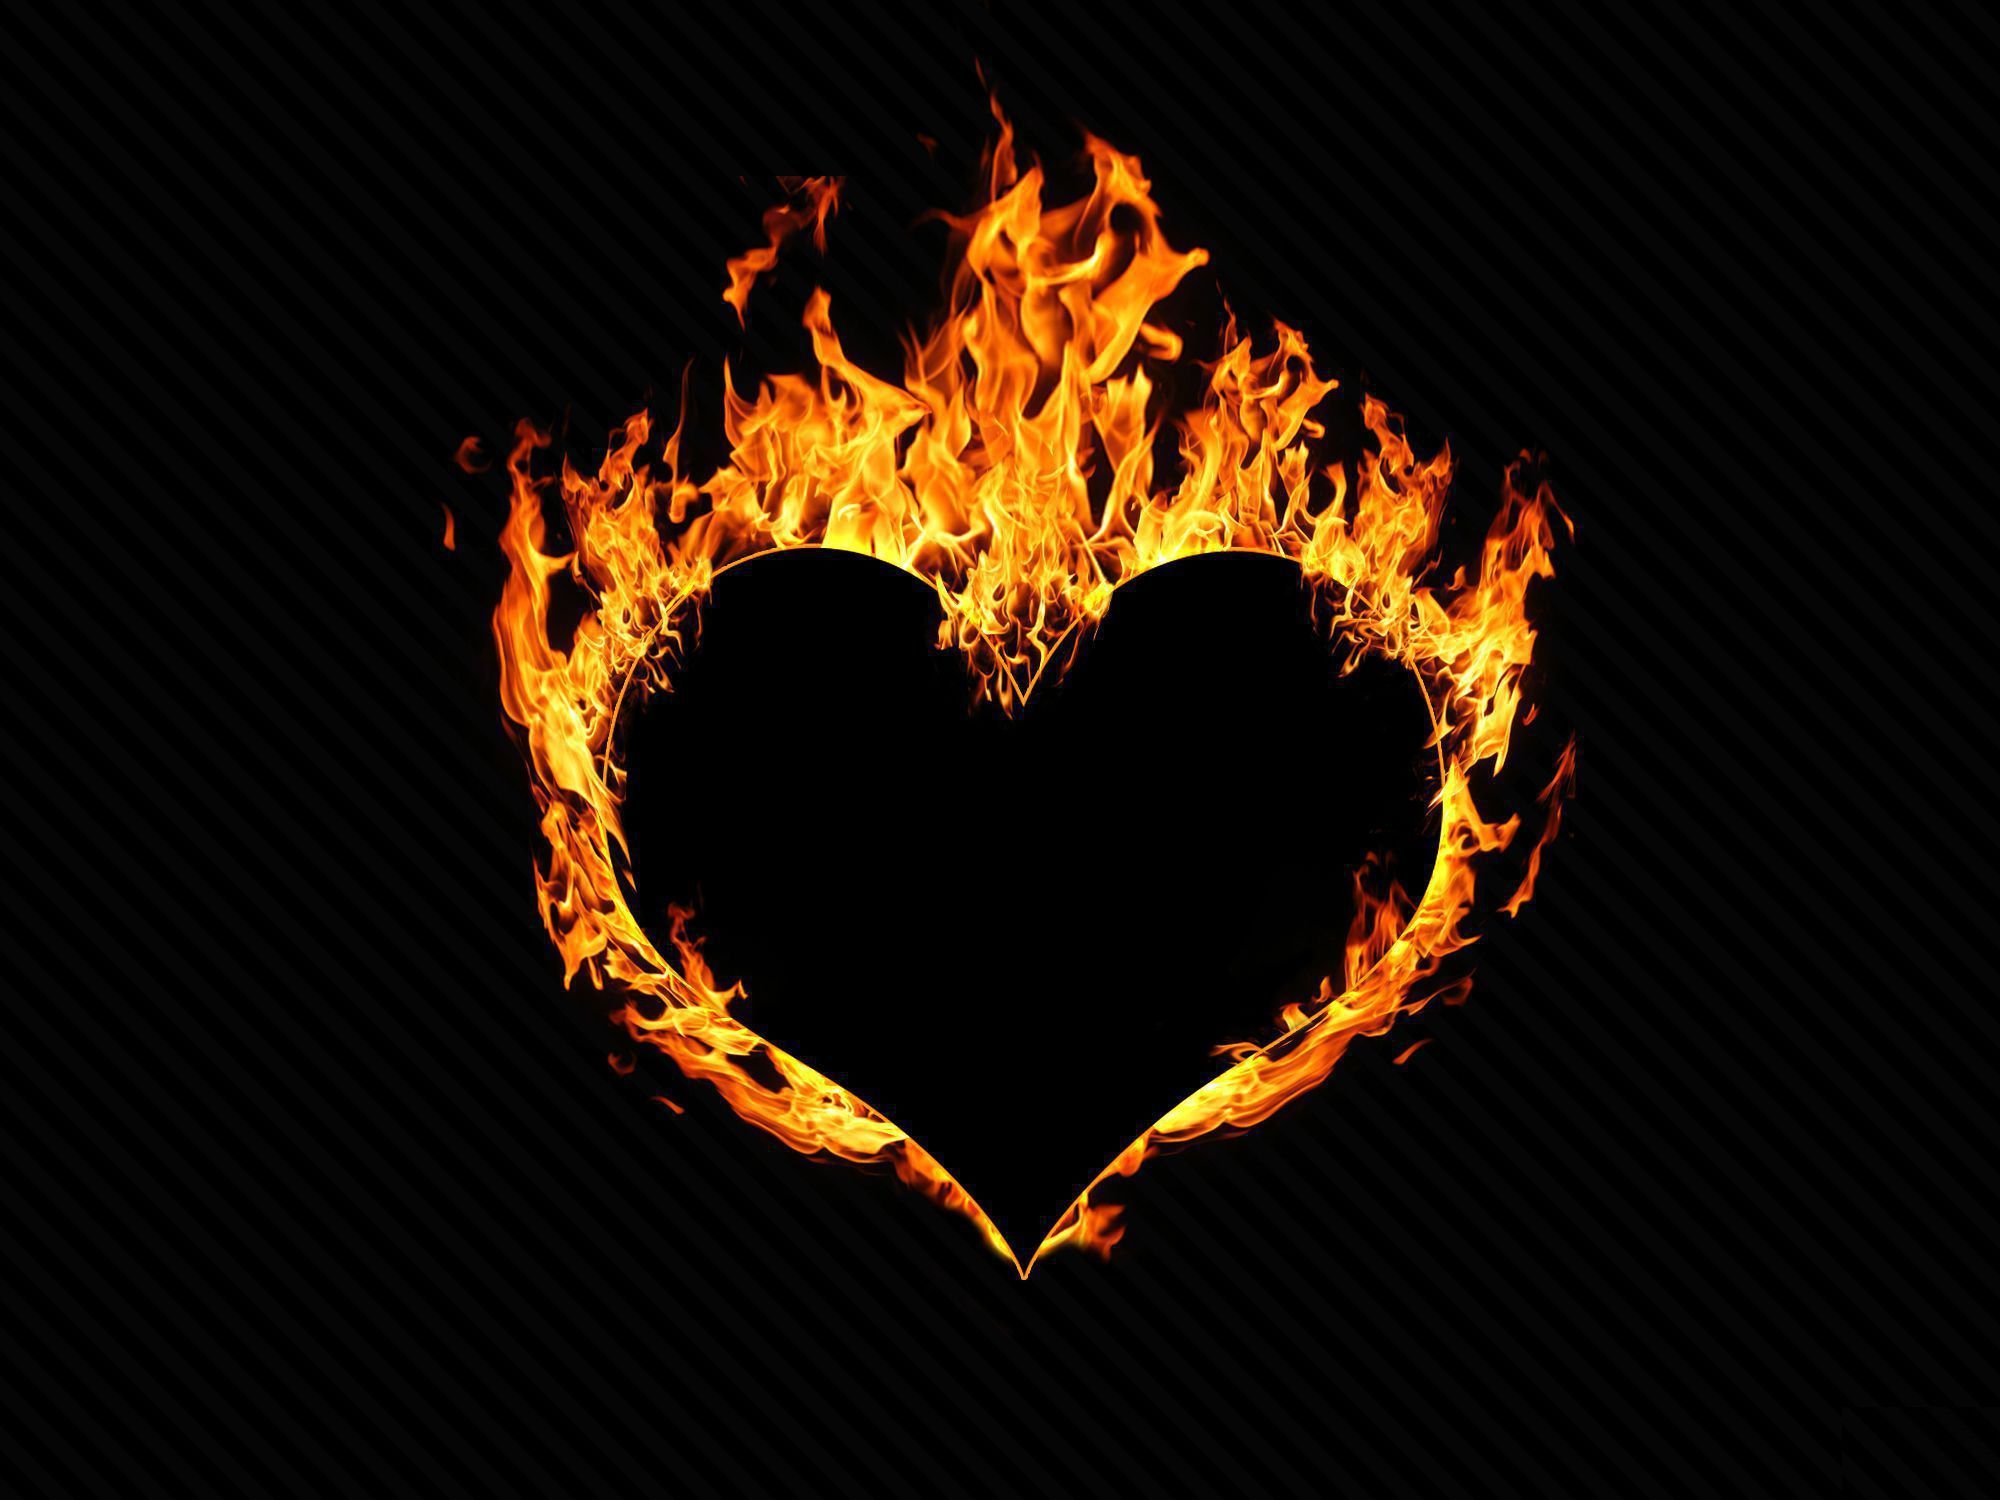 Burning Heart phone, desktop wallpaper .wallpaperdsc.net